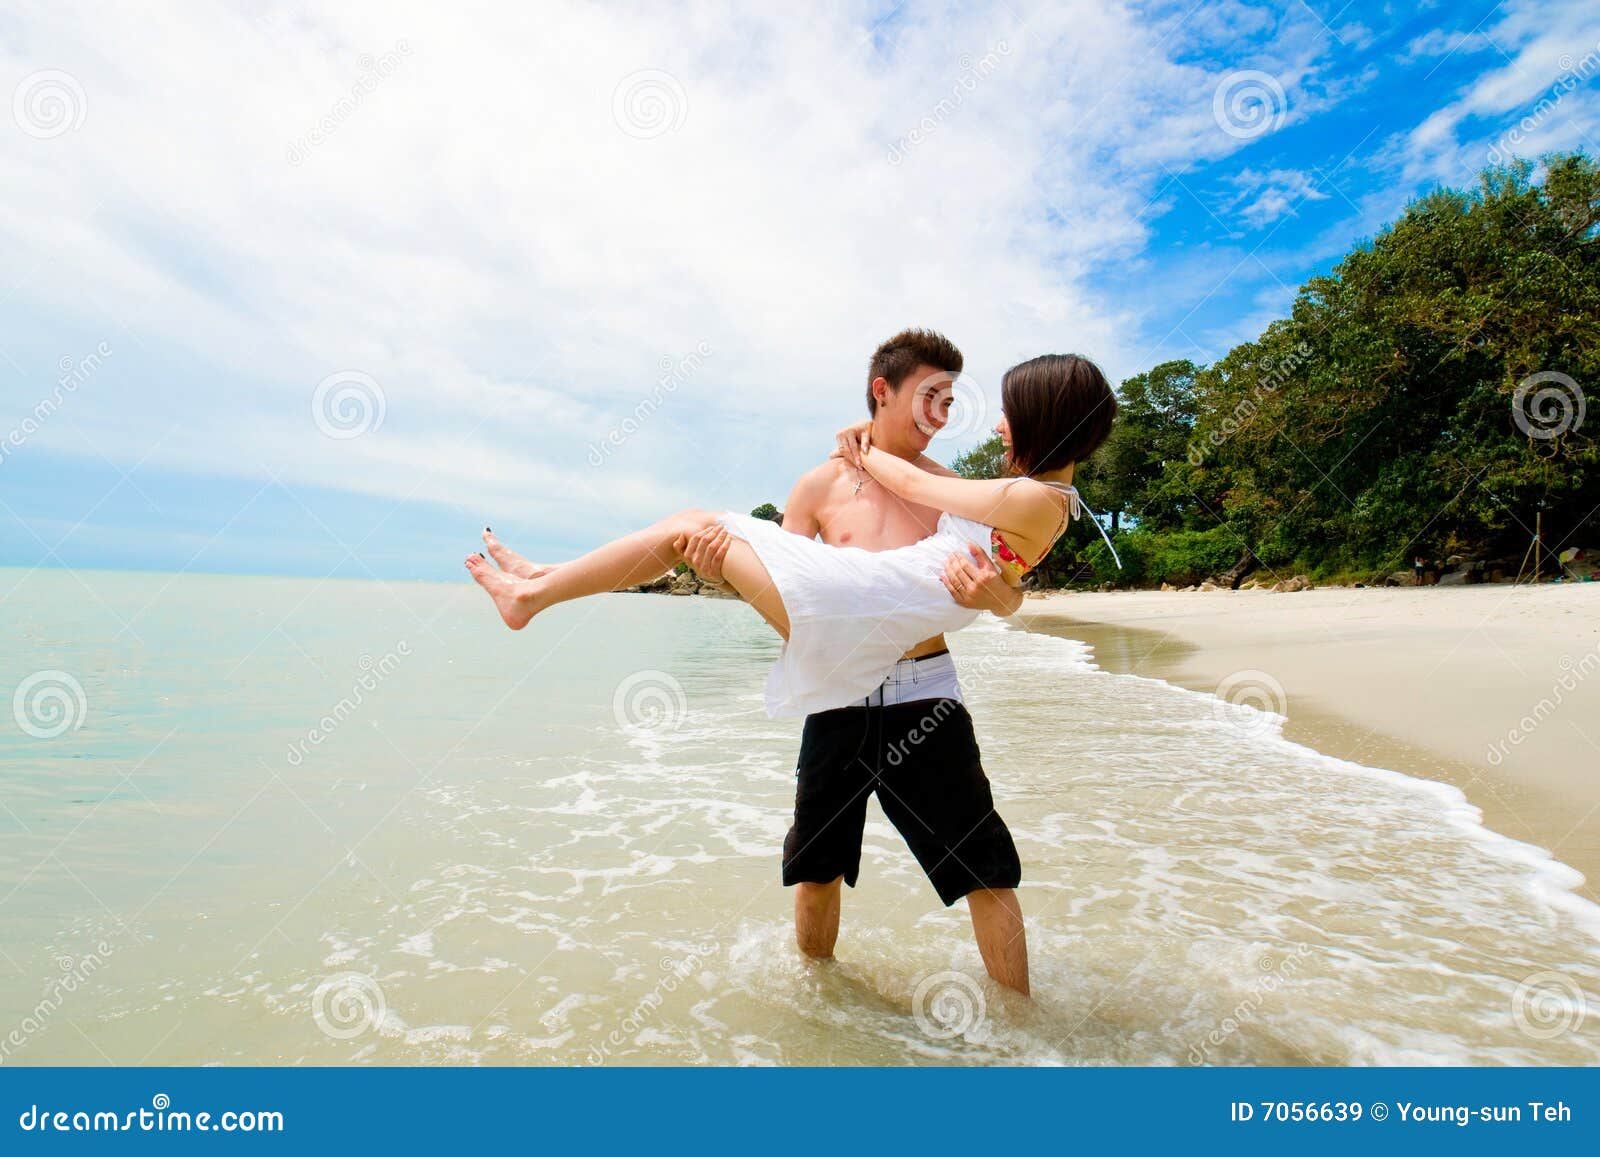 http://thumbs.dreamstime.com/z/loving-happy-couple-beach-7056639.jpg